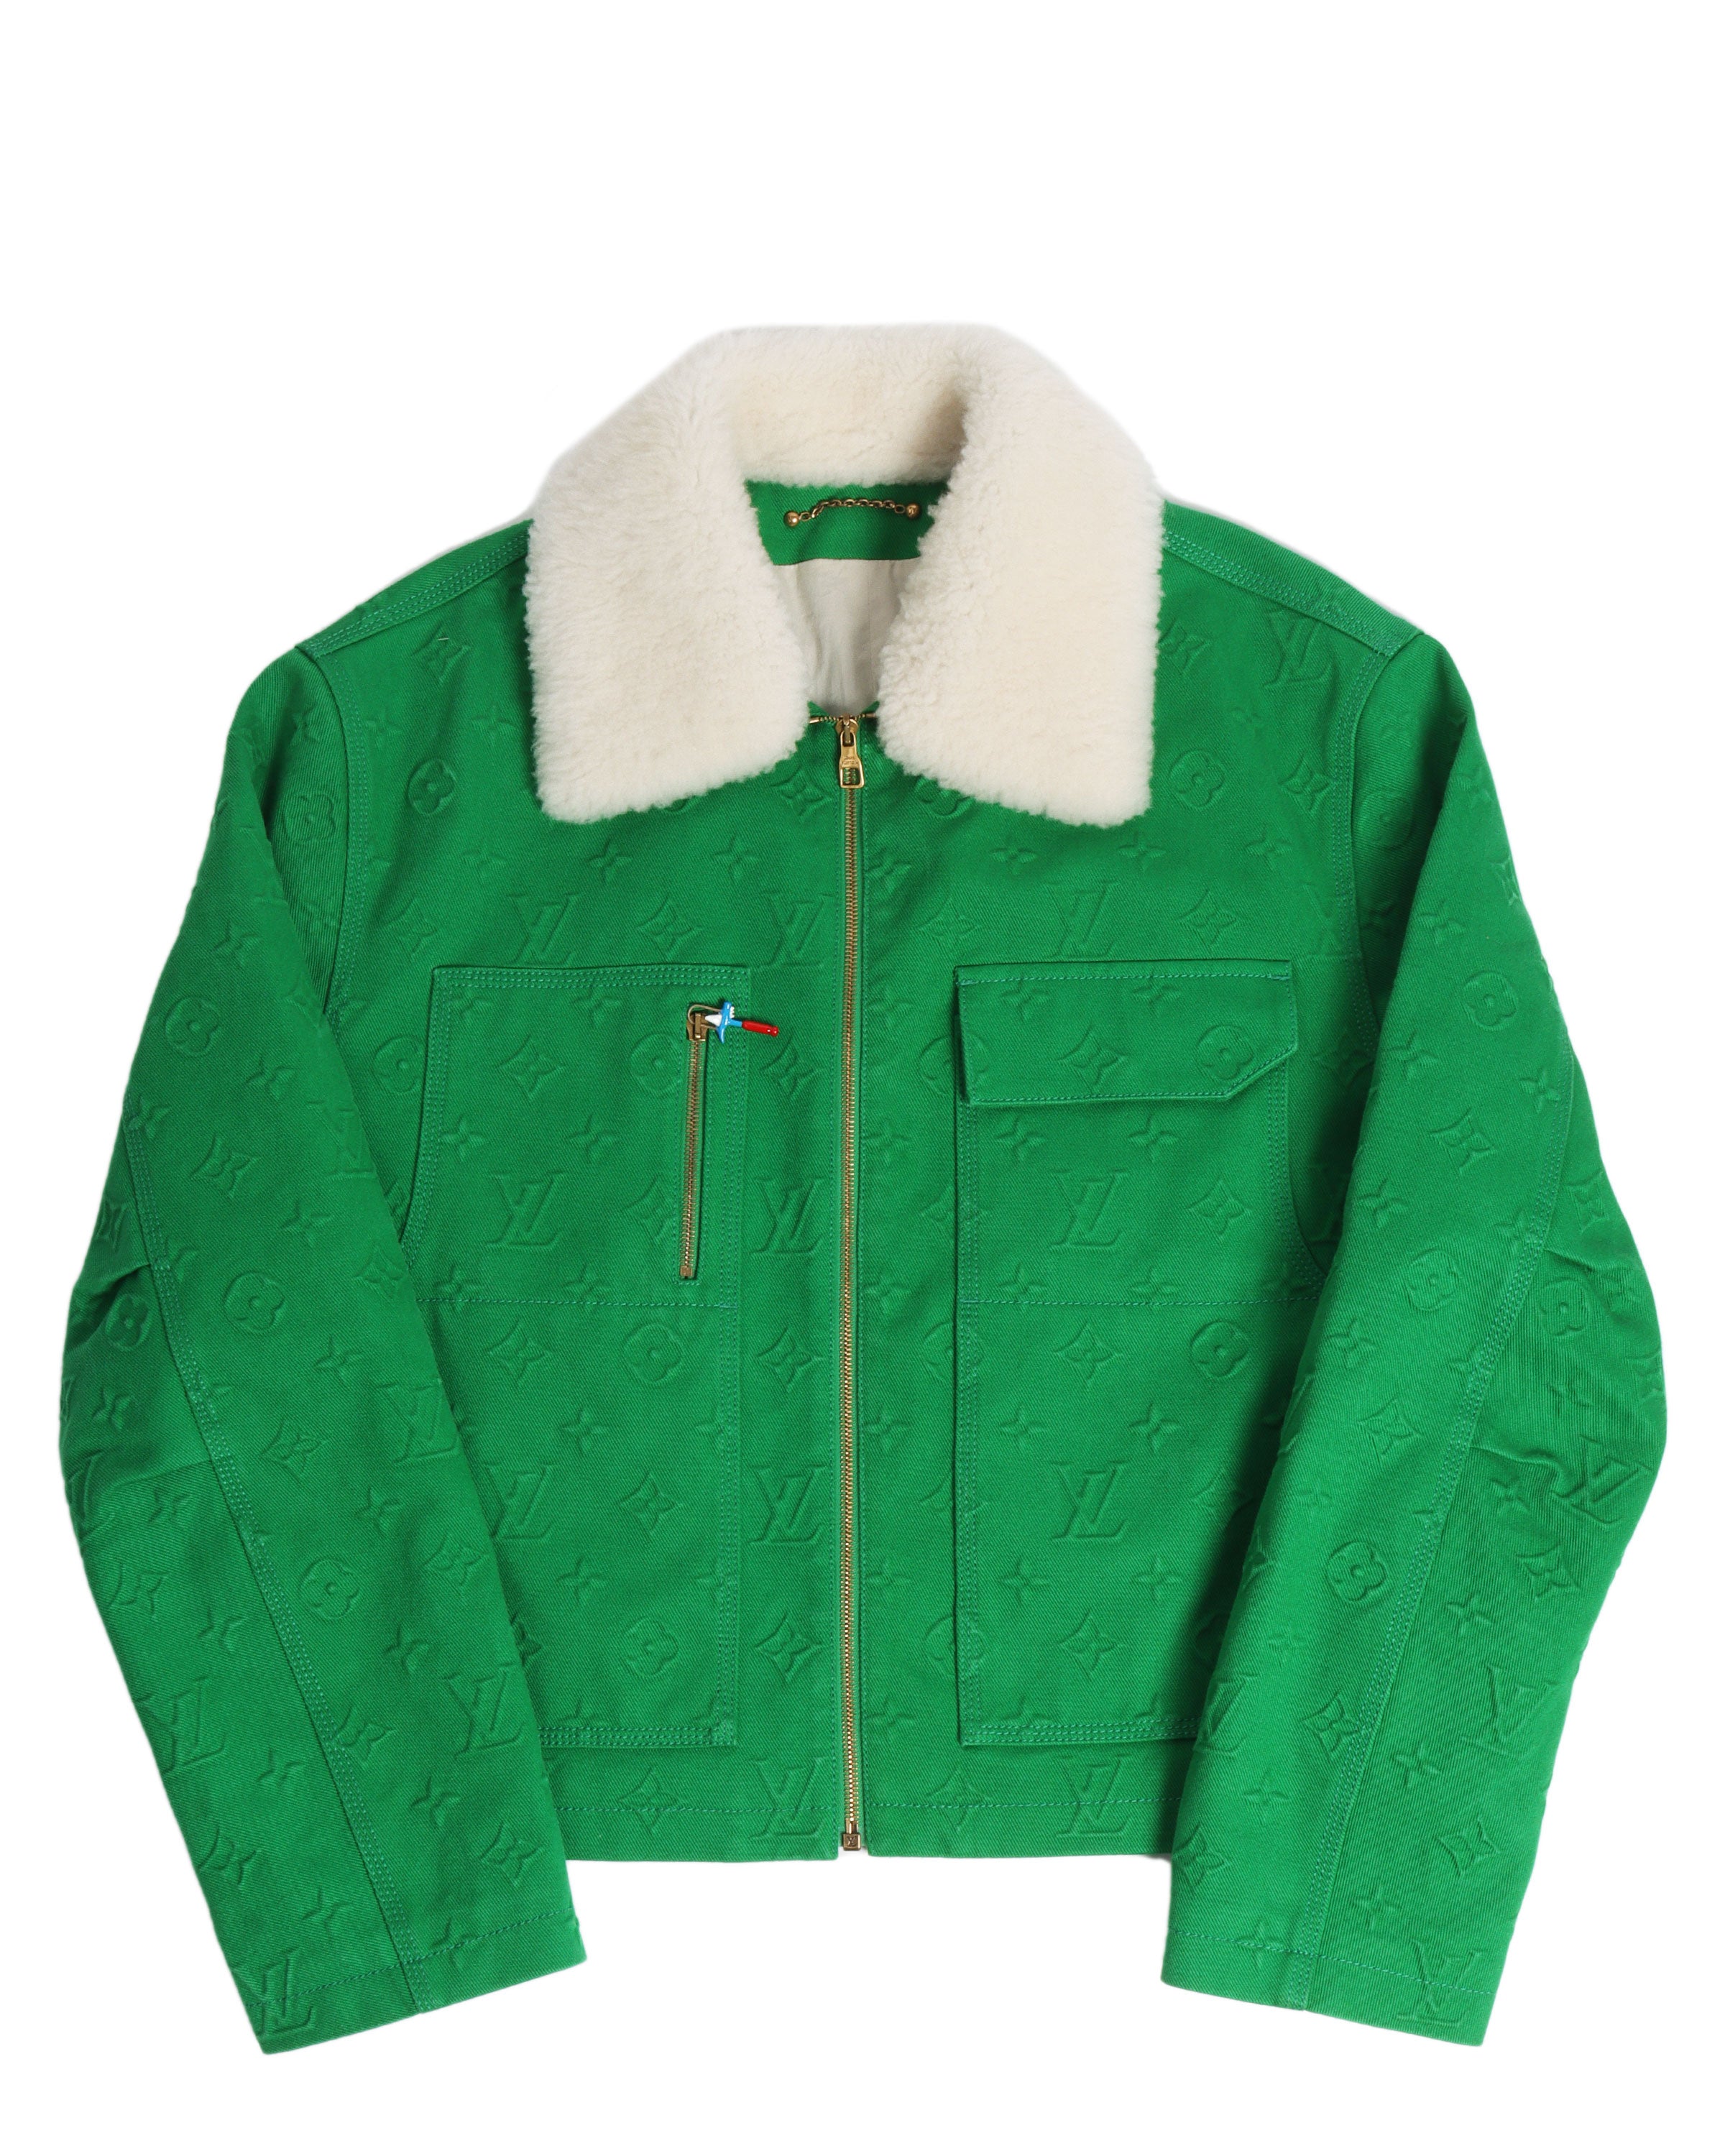 Louis Vuitton Monogram Jacket - 21 For Sale on 1stDibs  lv monogram jacket,  louis vuitton monogram jacket price, louis vuitton green monogram jacket